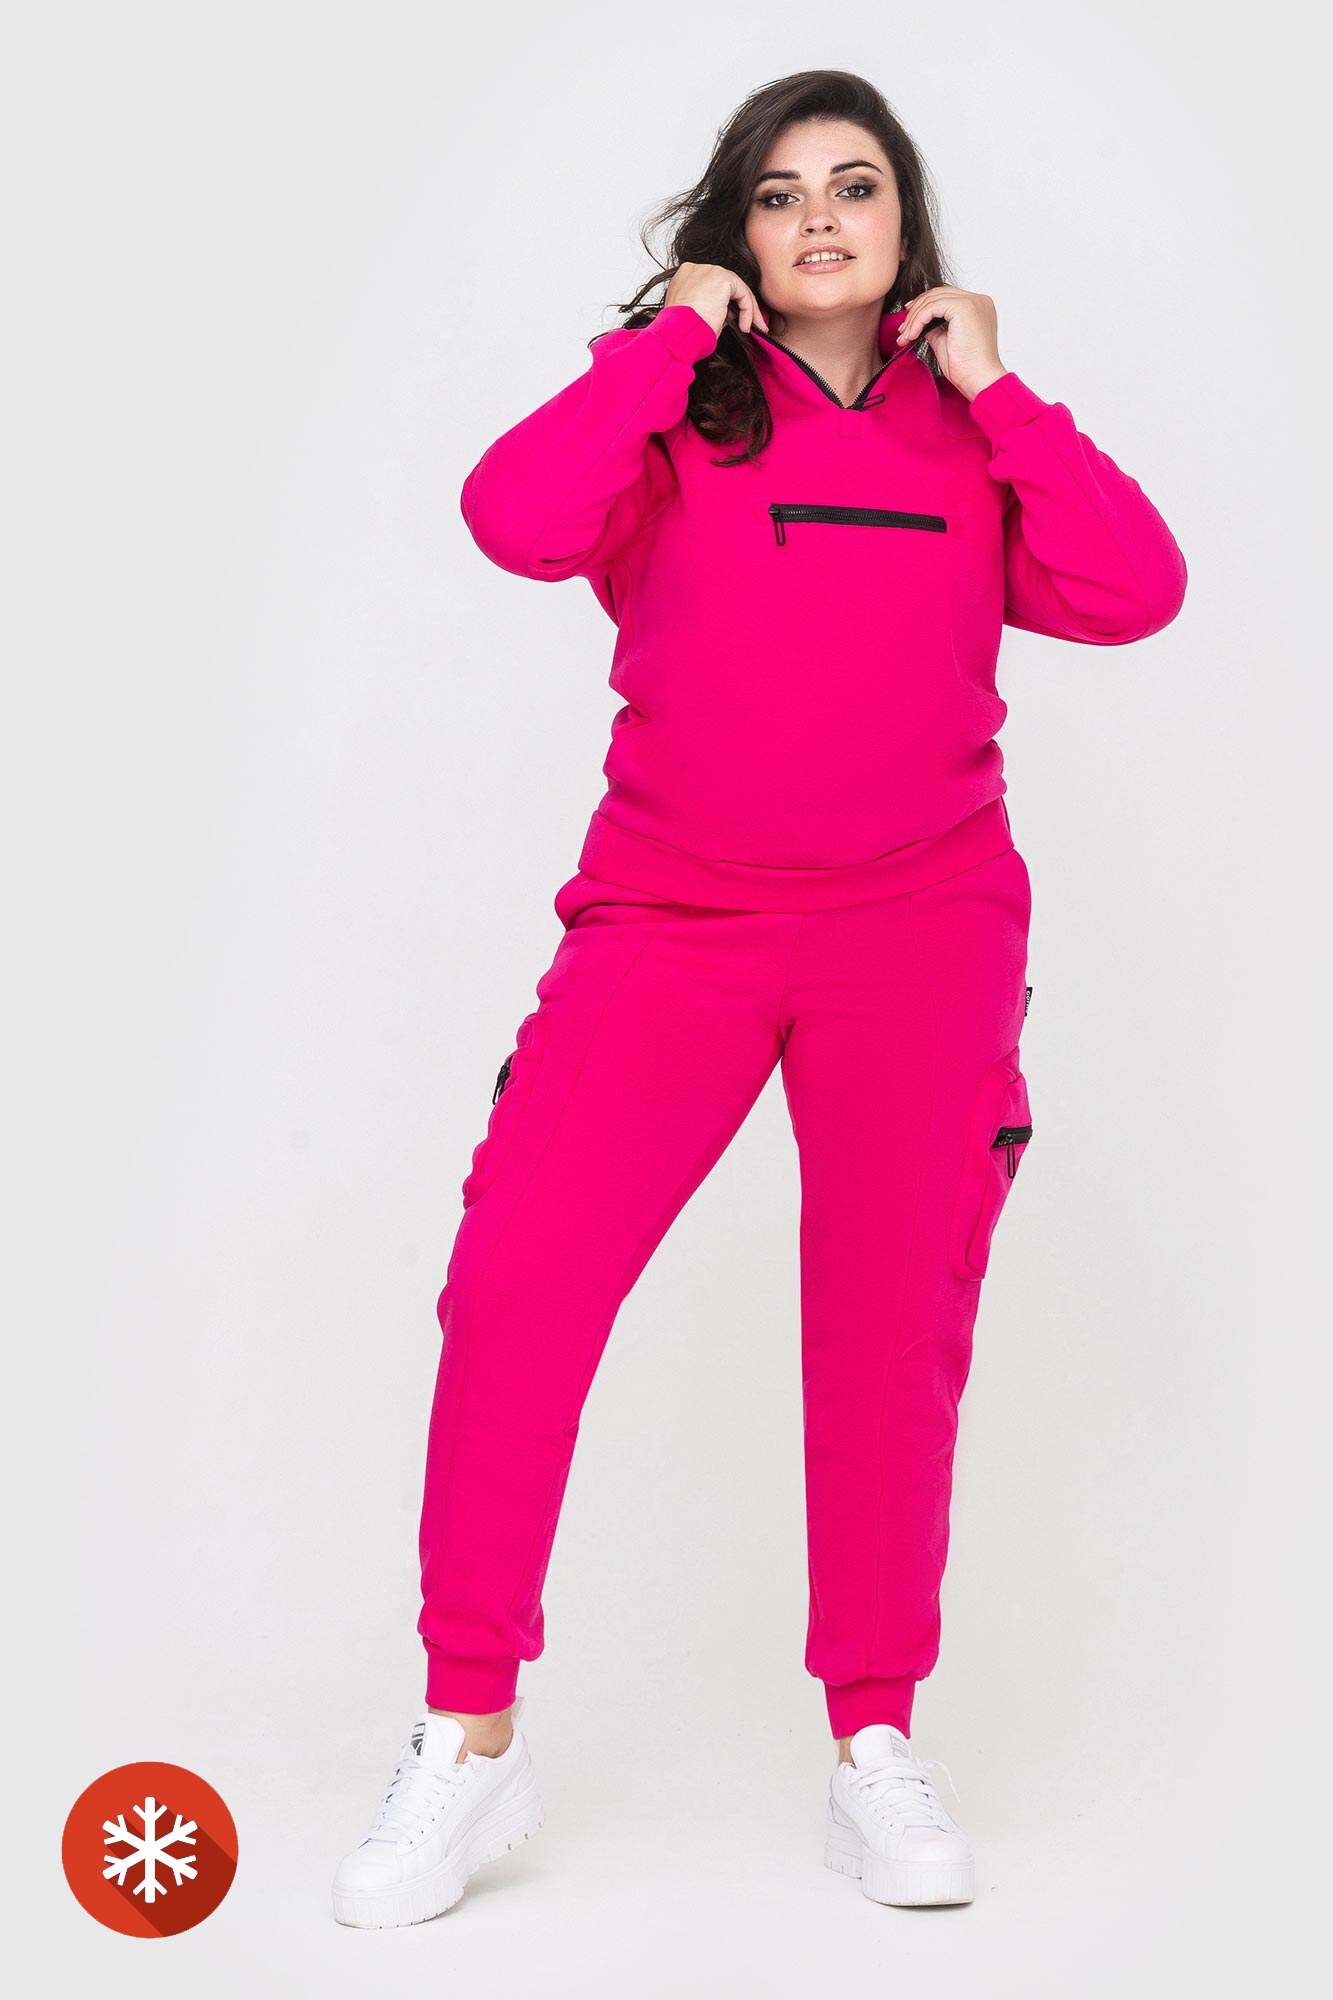 Damen Fuchsia Anzug - Kleidung - fuchsia, pink